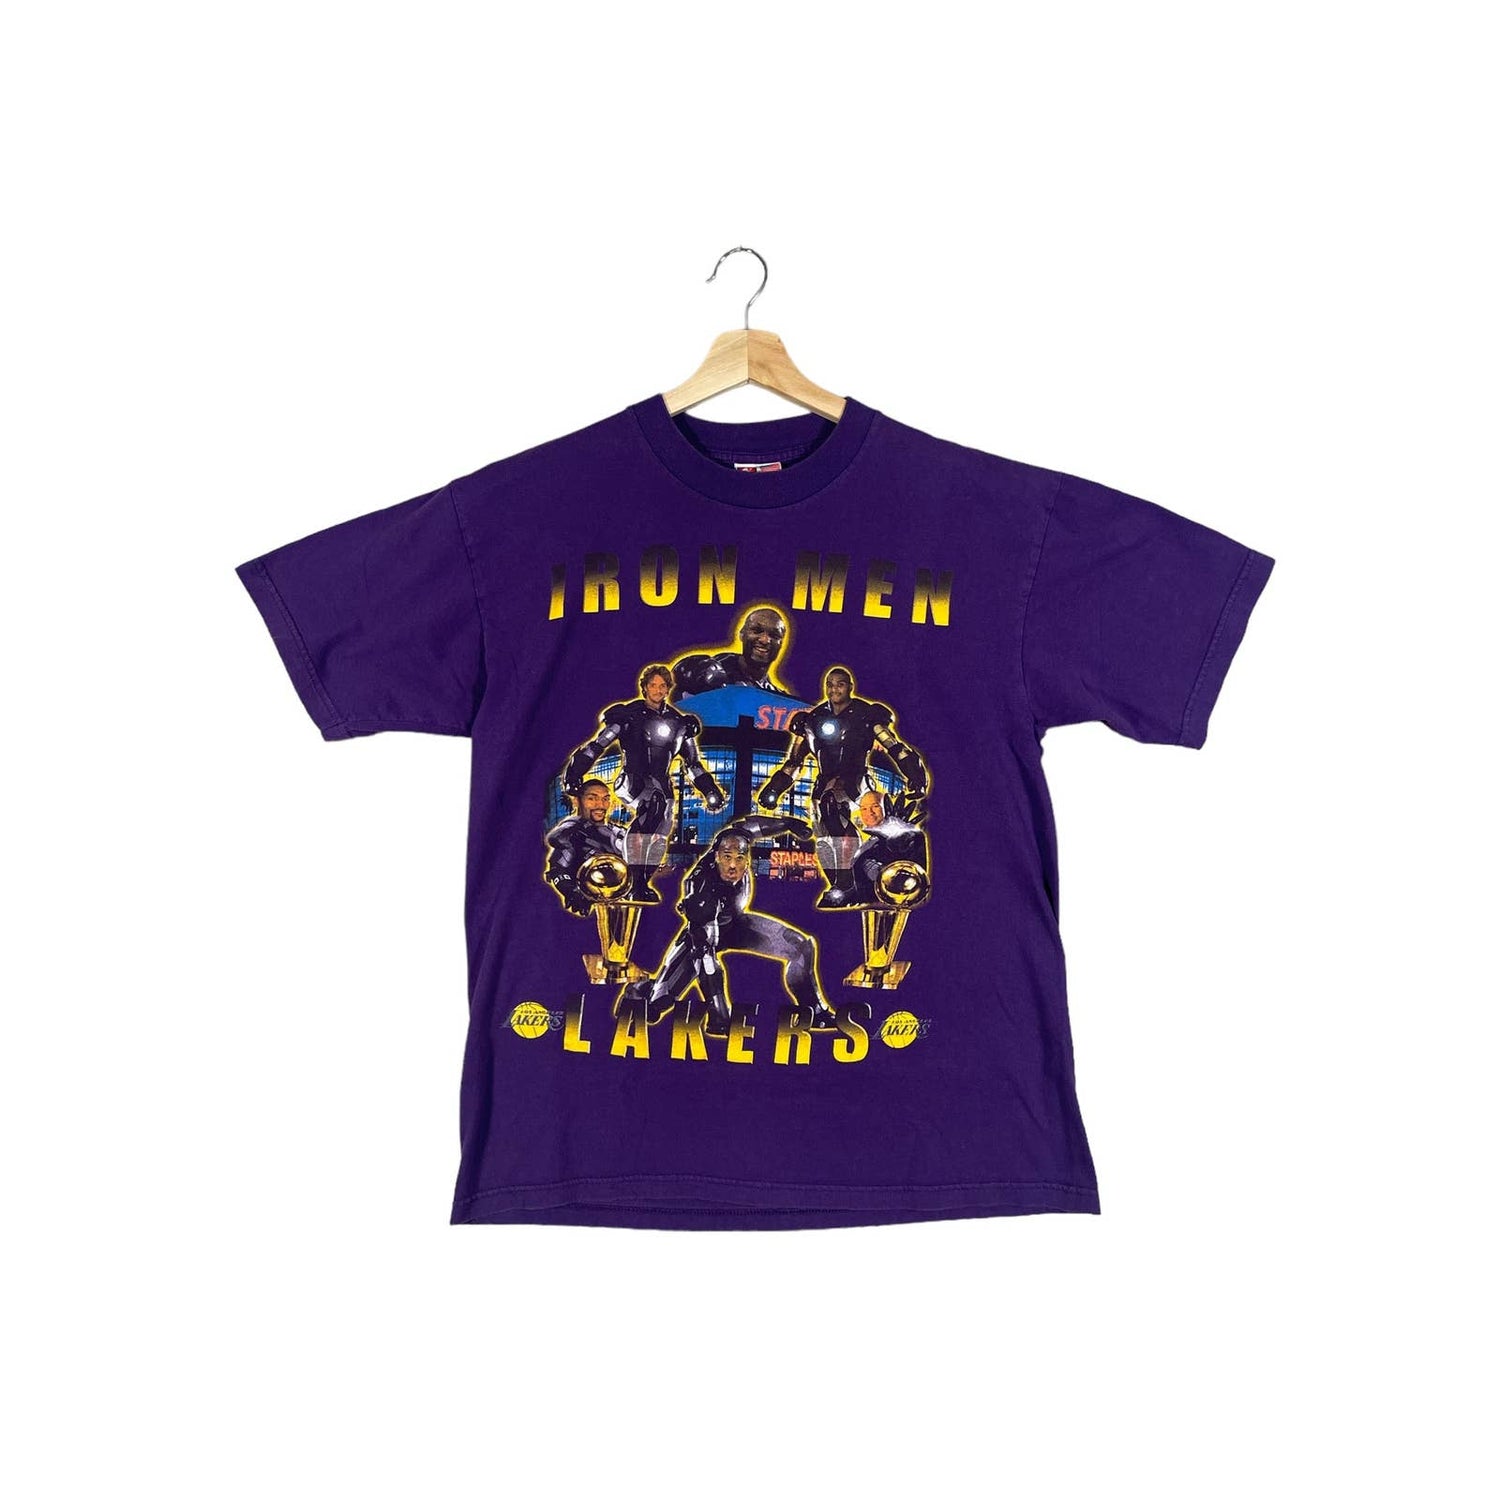 Vintage 2000's Los Angeles Lakers "Iron Men" T-Shirt